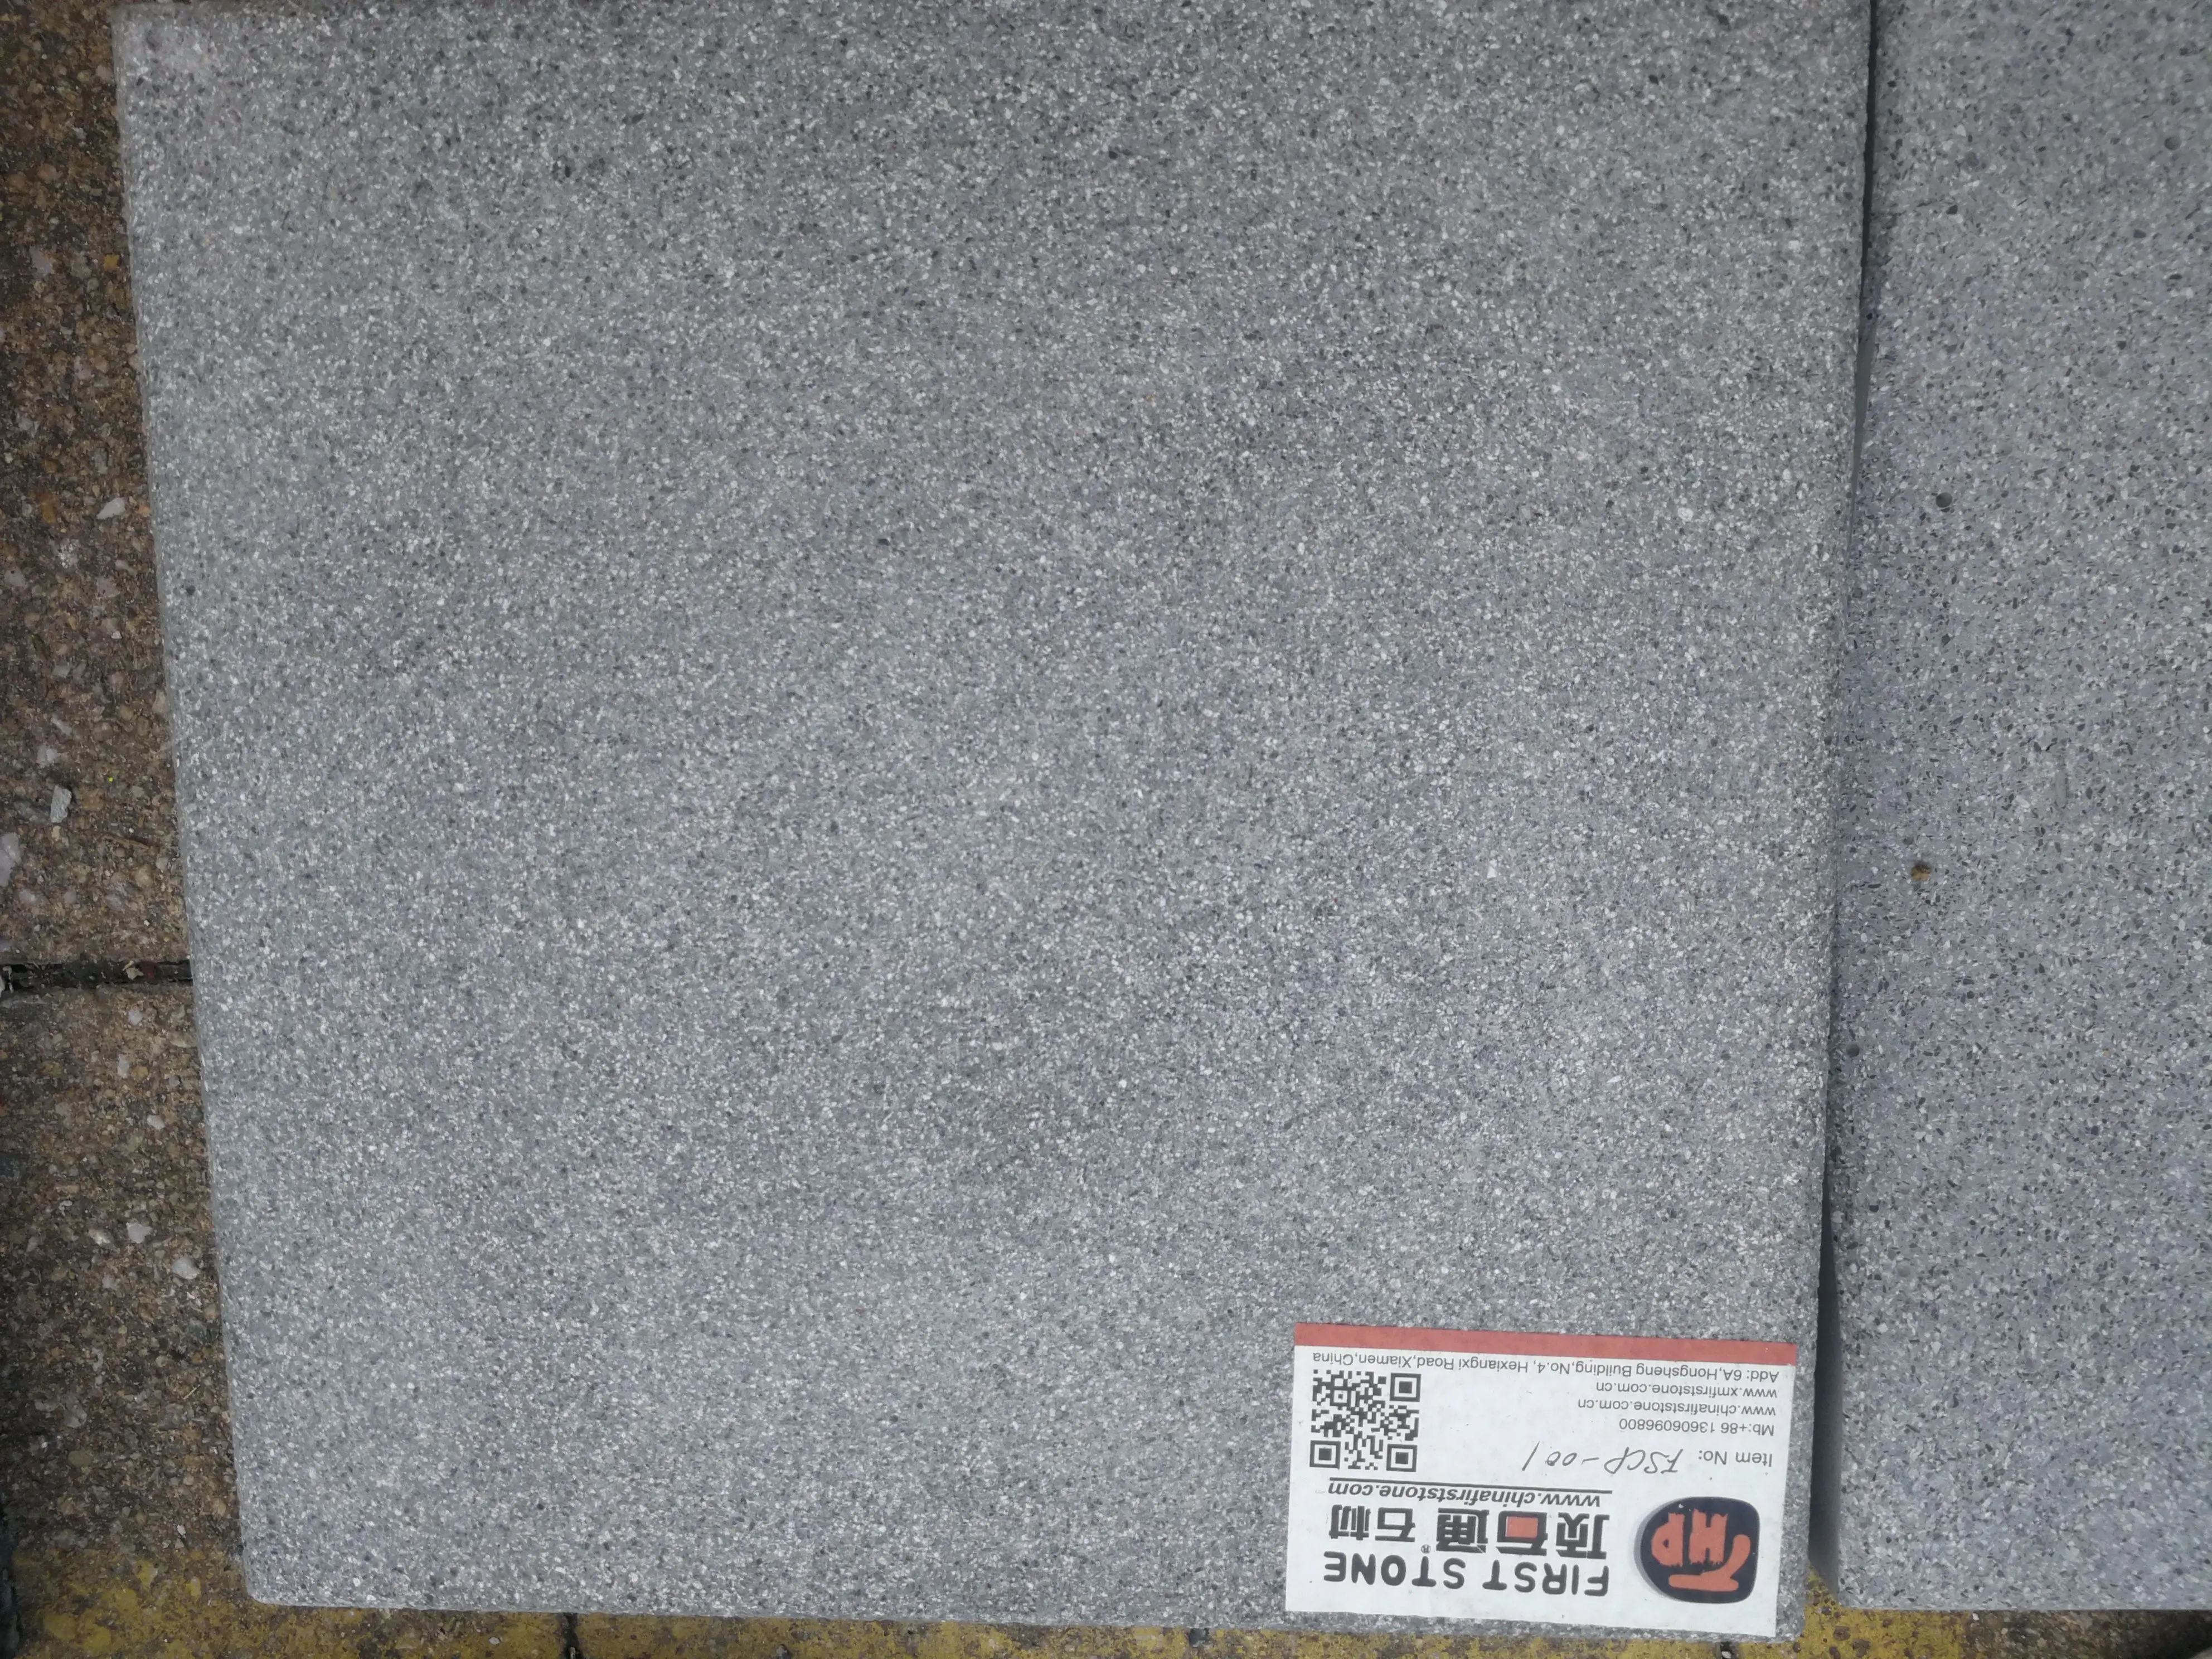 Grey Granite Paving Slabs Cheap Driveway Paving Stone